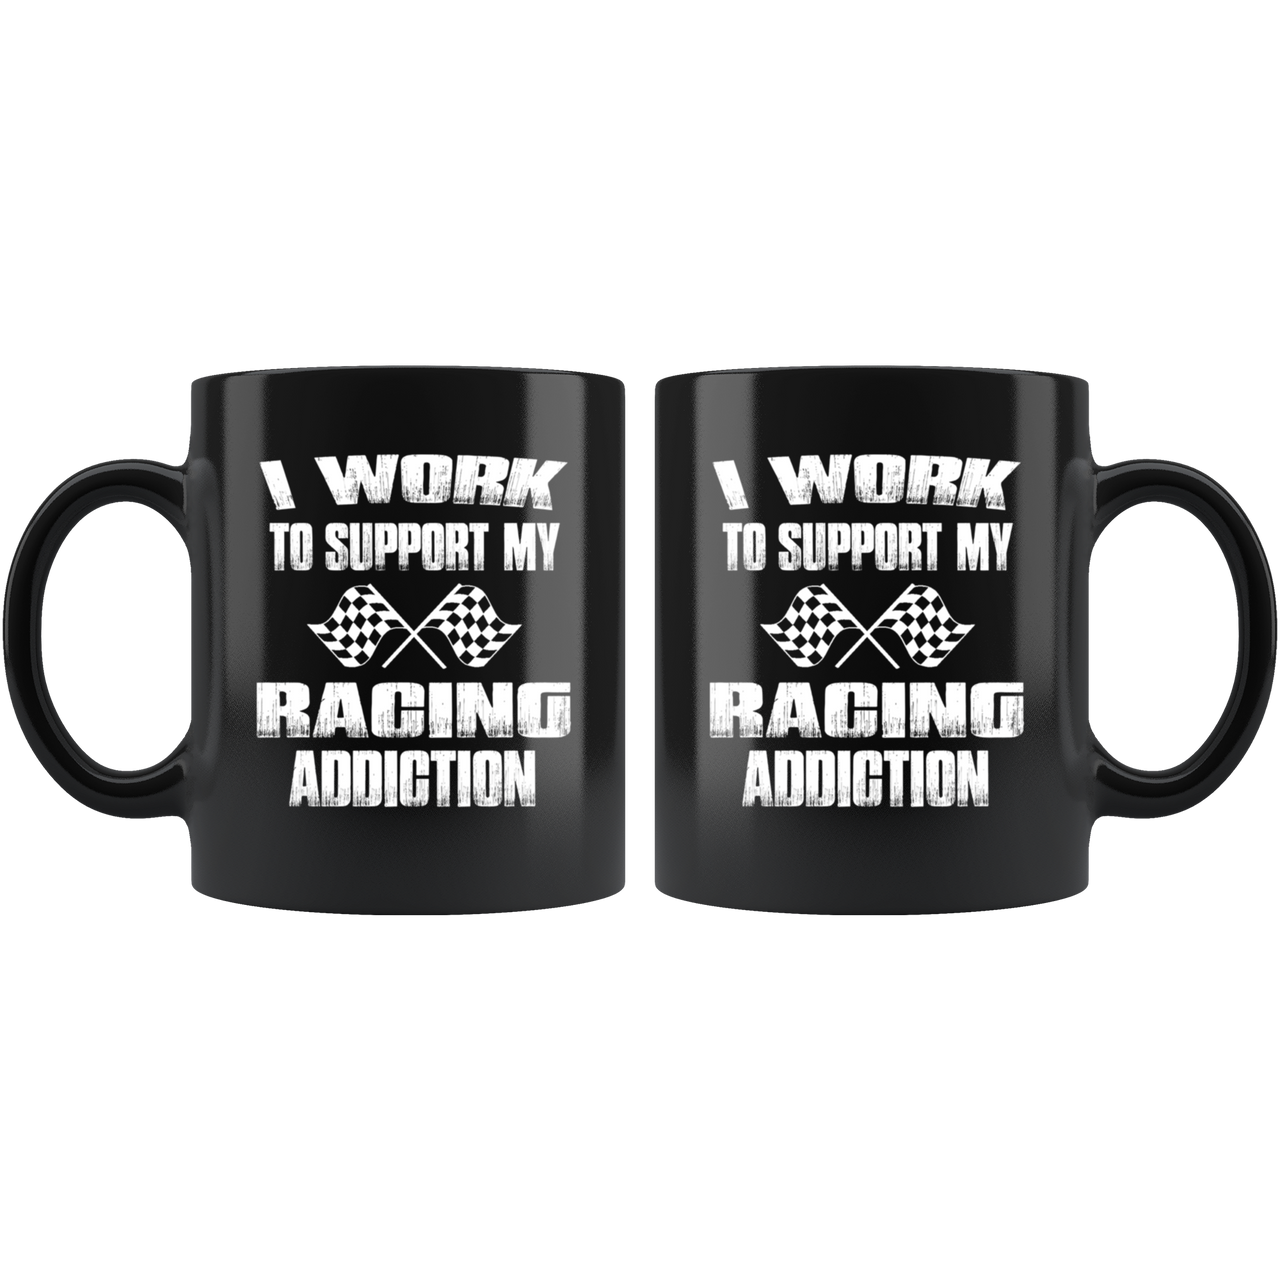 I Work To Support My Racing Addiction Mug!